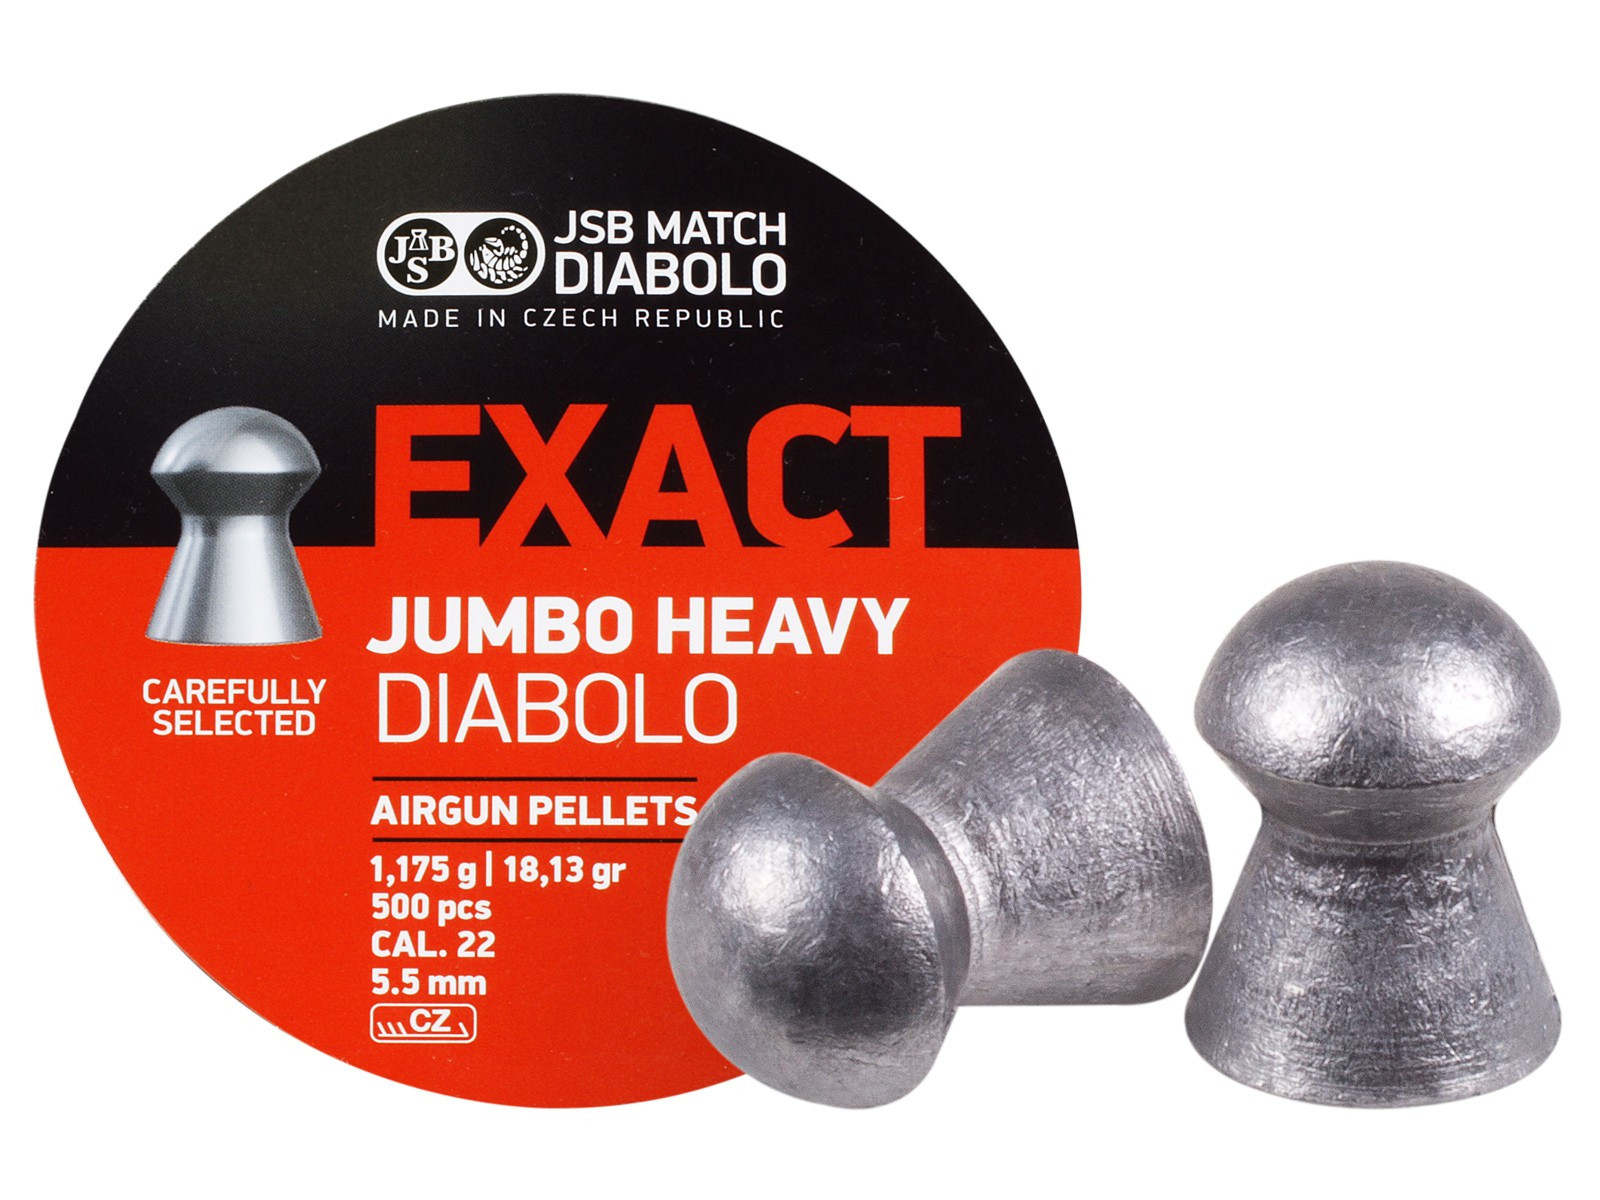 JSB Diabolo Exact Jumbo Heavy .22 Cal, 18.13 gr - 500 ct domed pellets